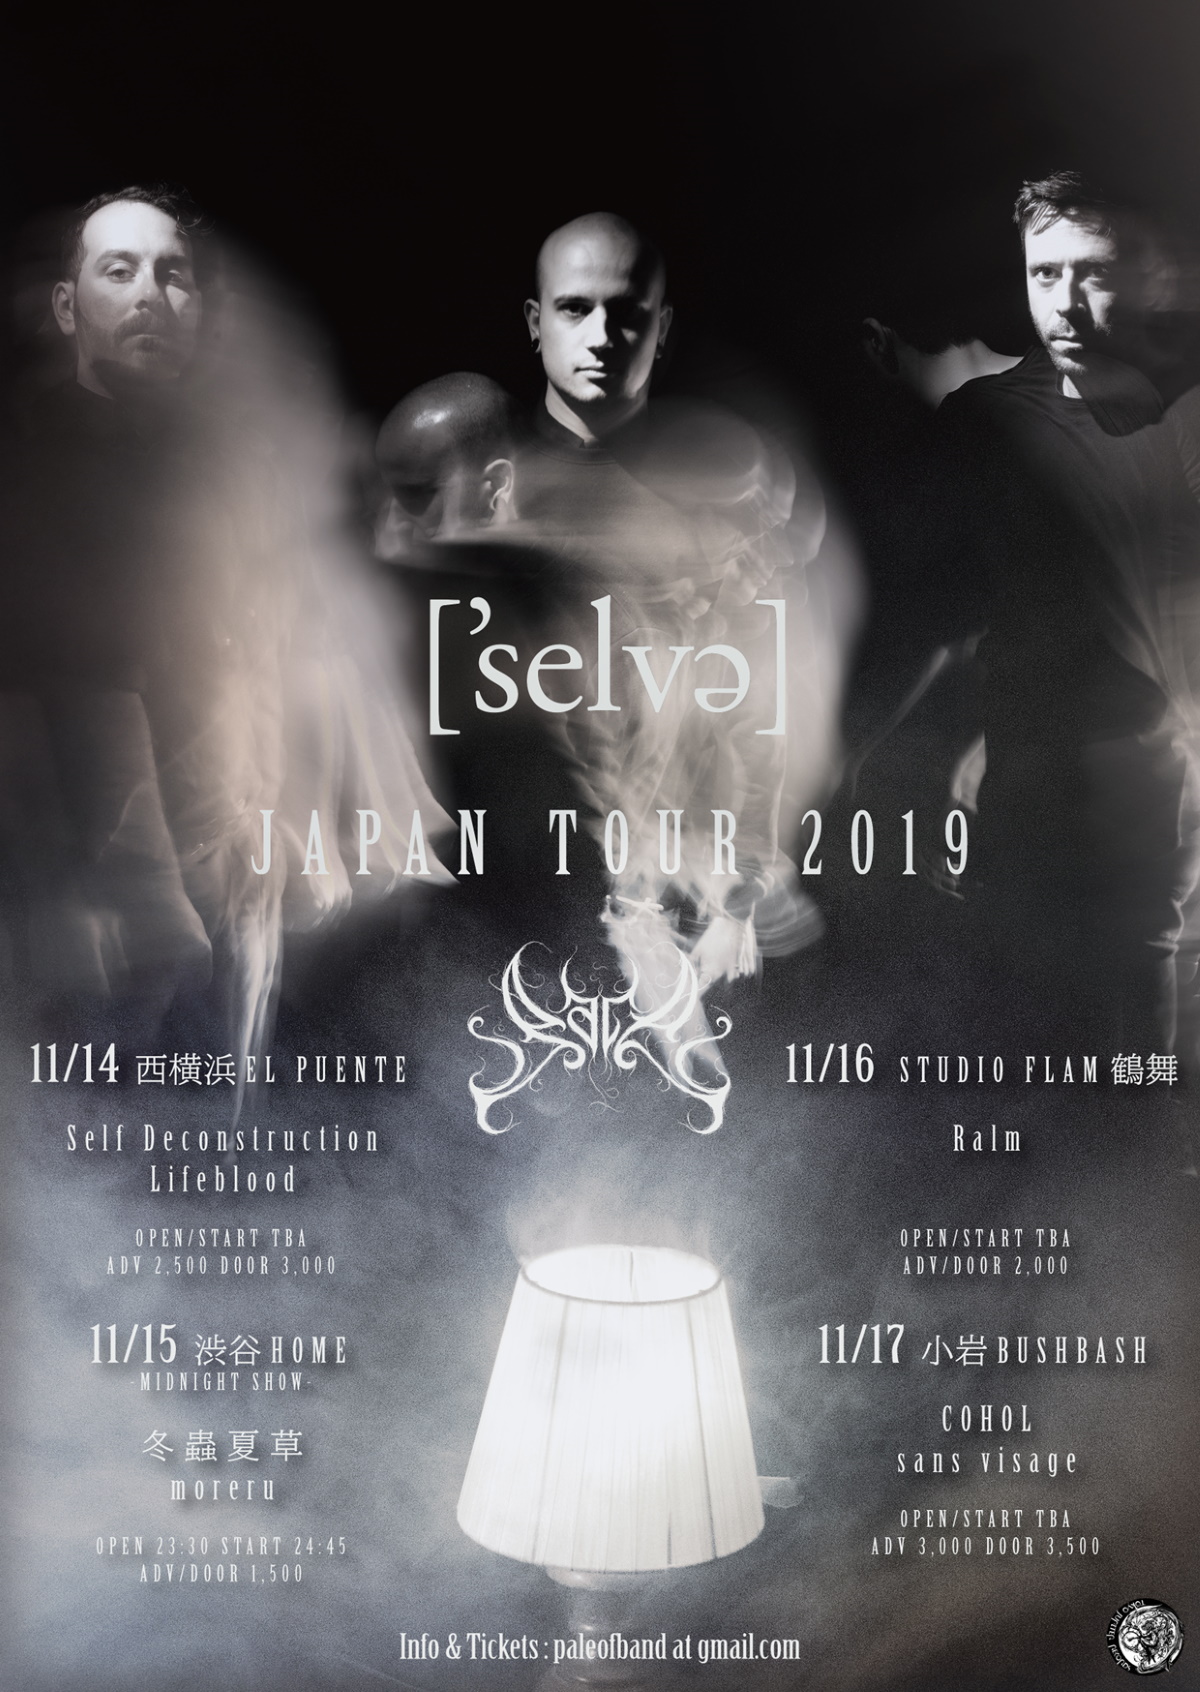 SELVA Japanese tour 2019